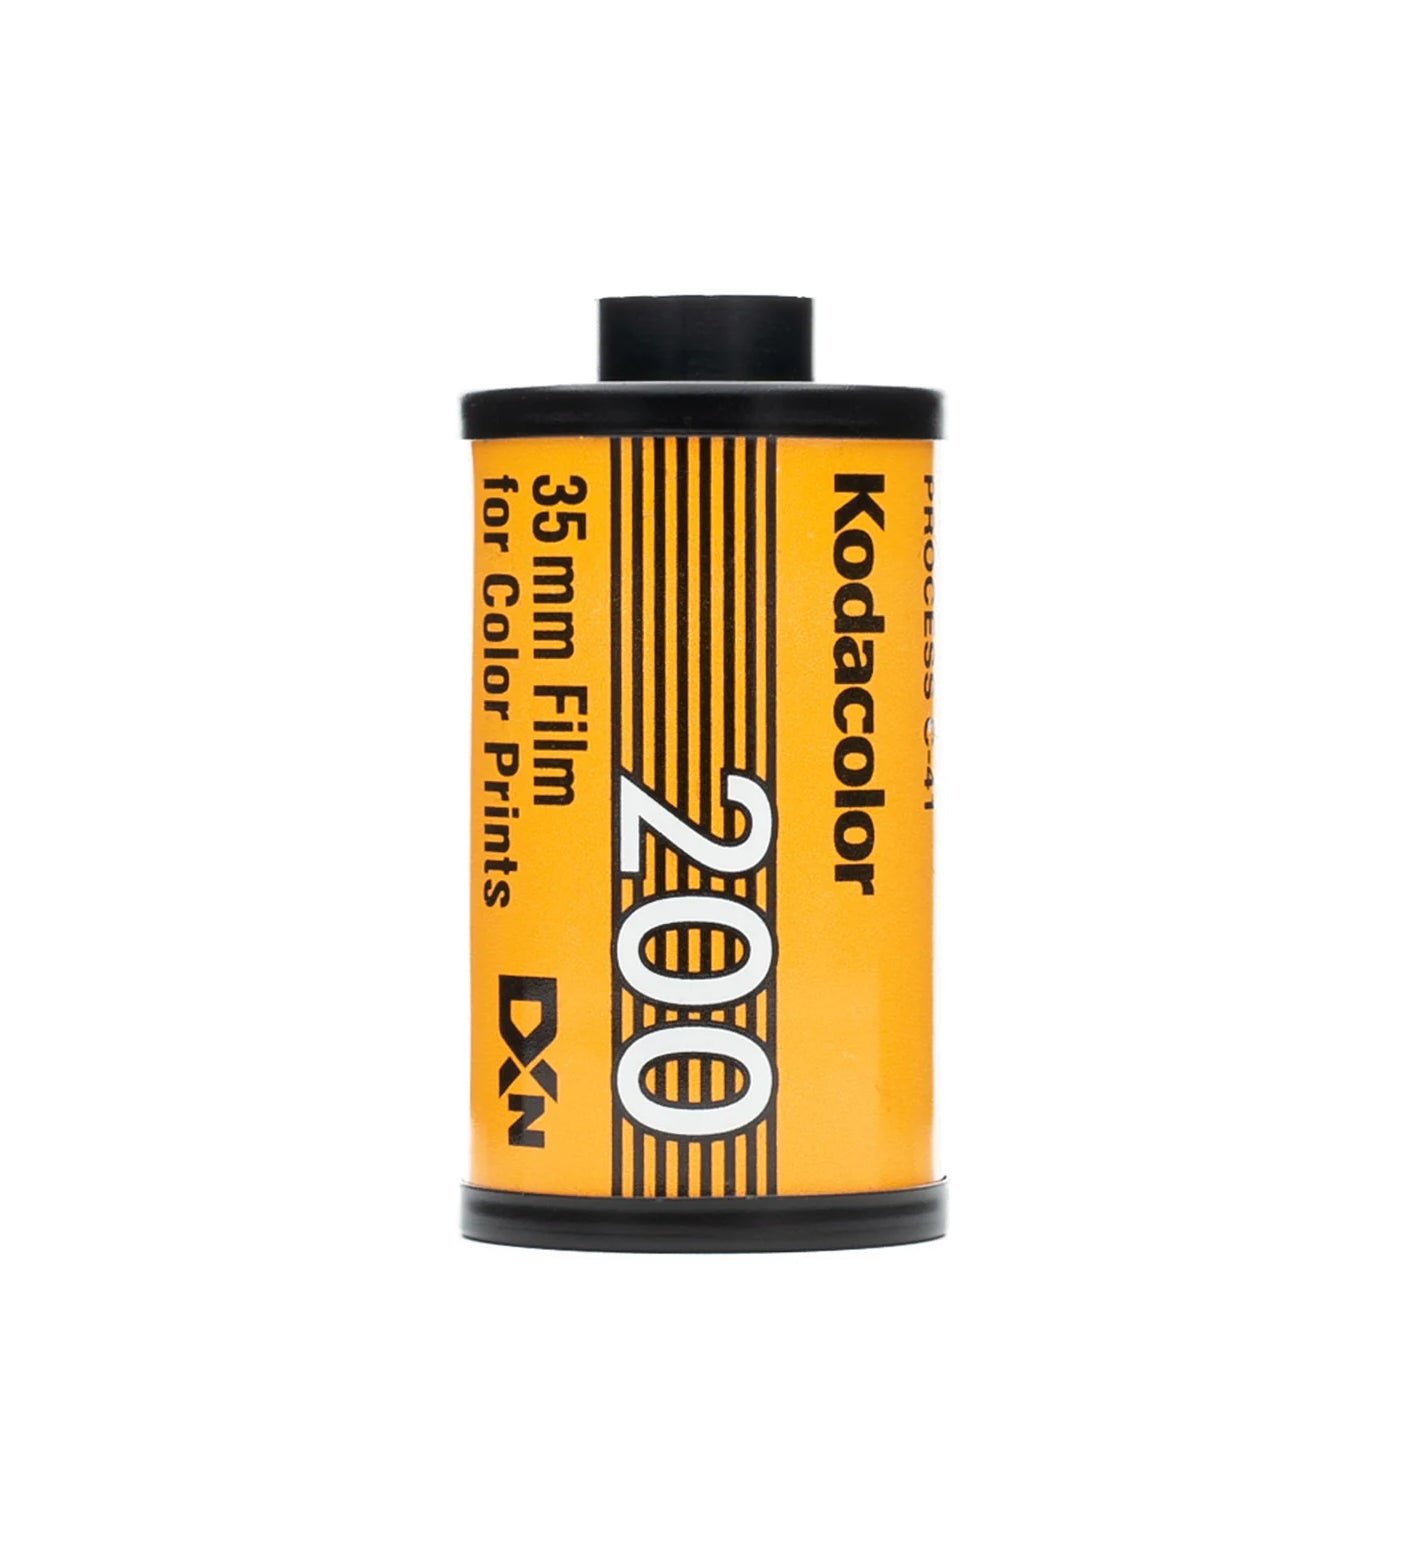 Kodak ColorPlus 200 35mm Film 36 Exposures (£11.99 incl VAT)